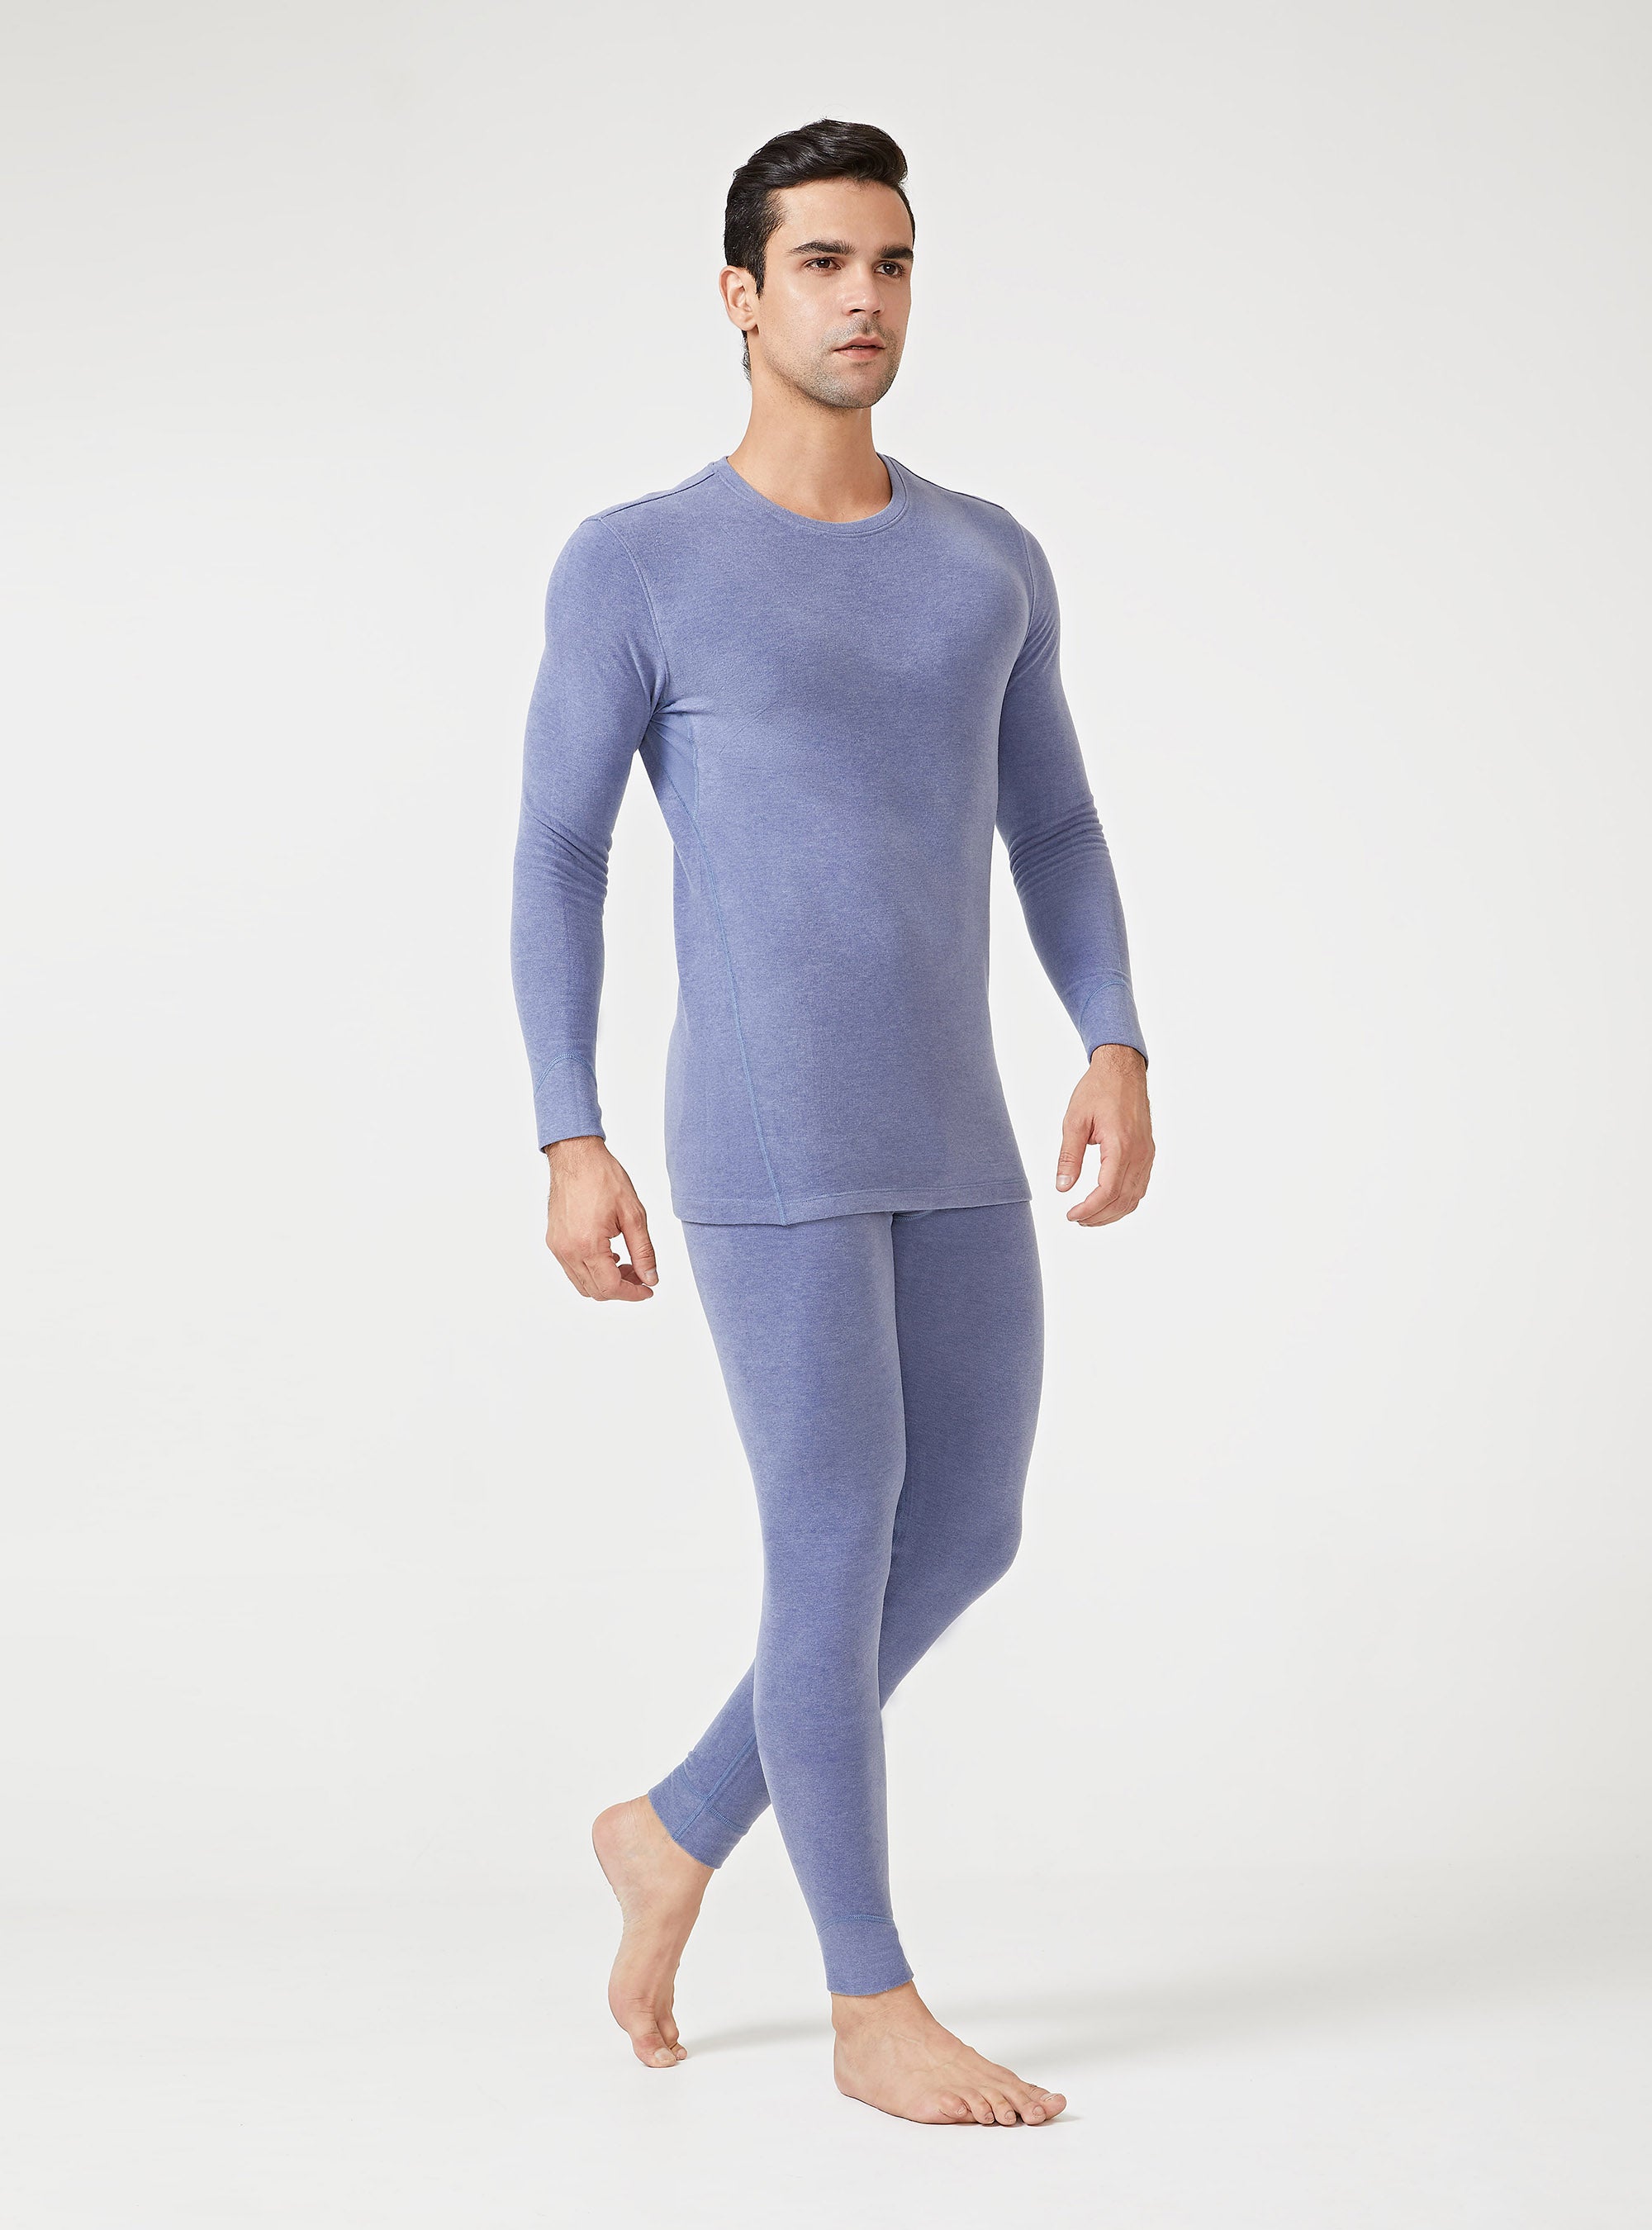 Men's Fleece Lined Long Johns Stretchy Winter Thermal leggings